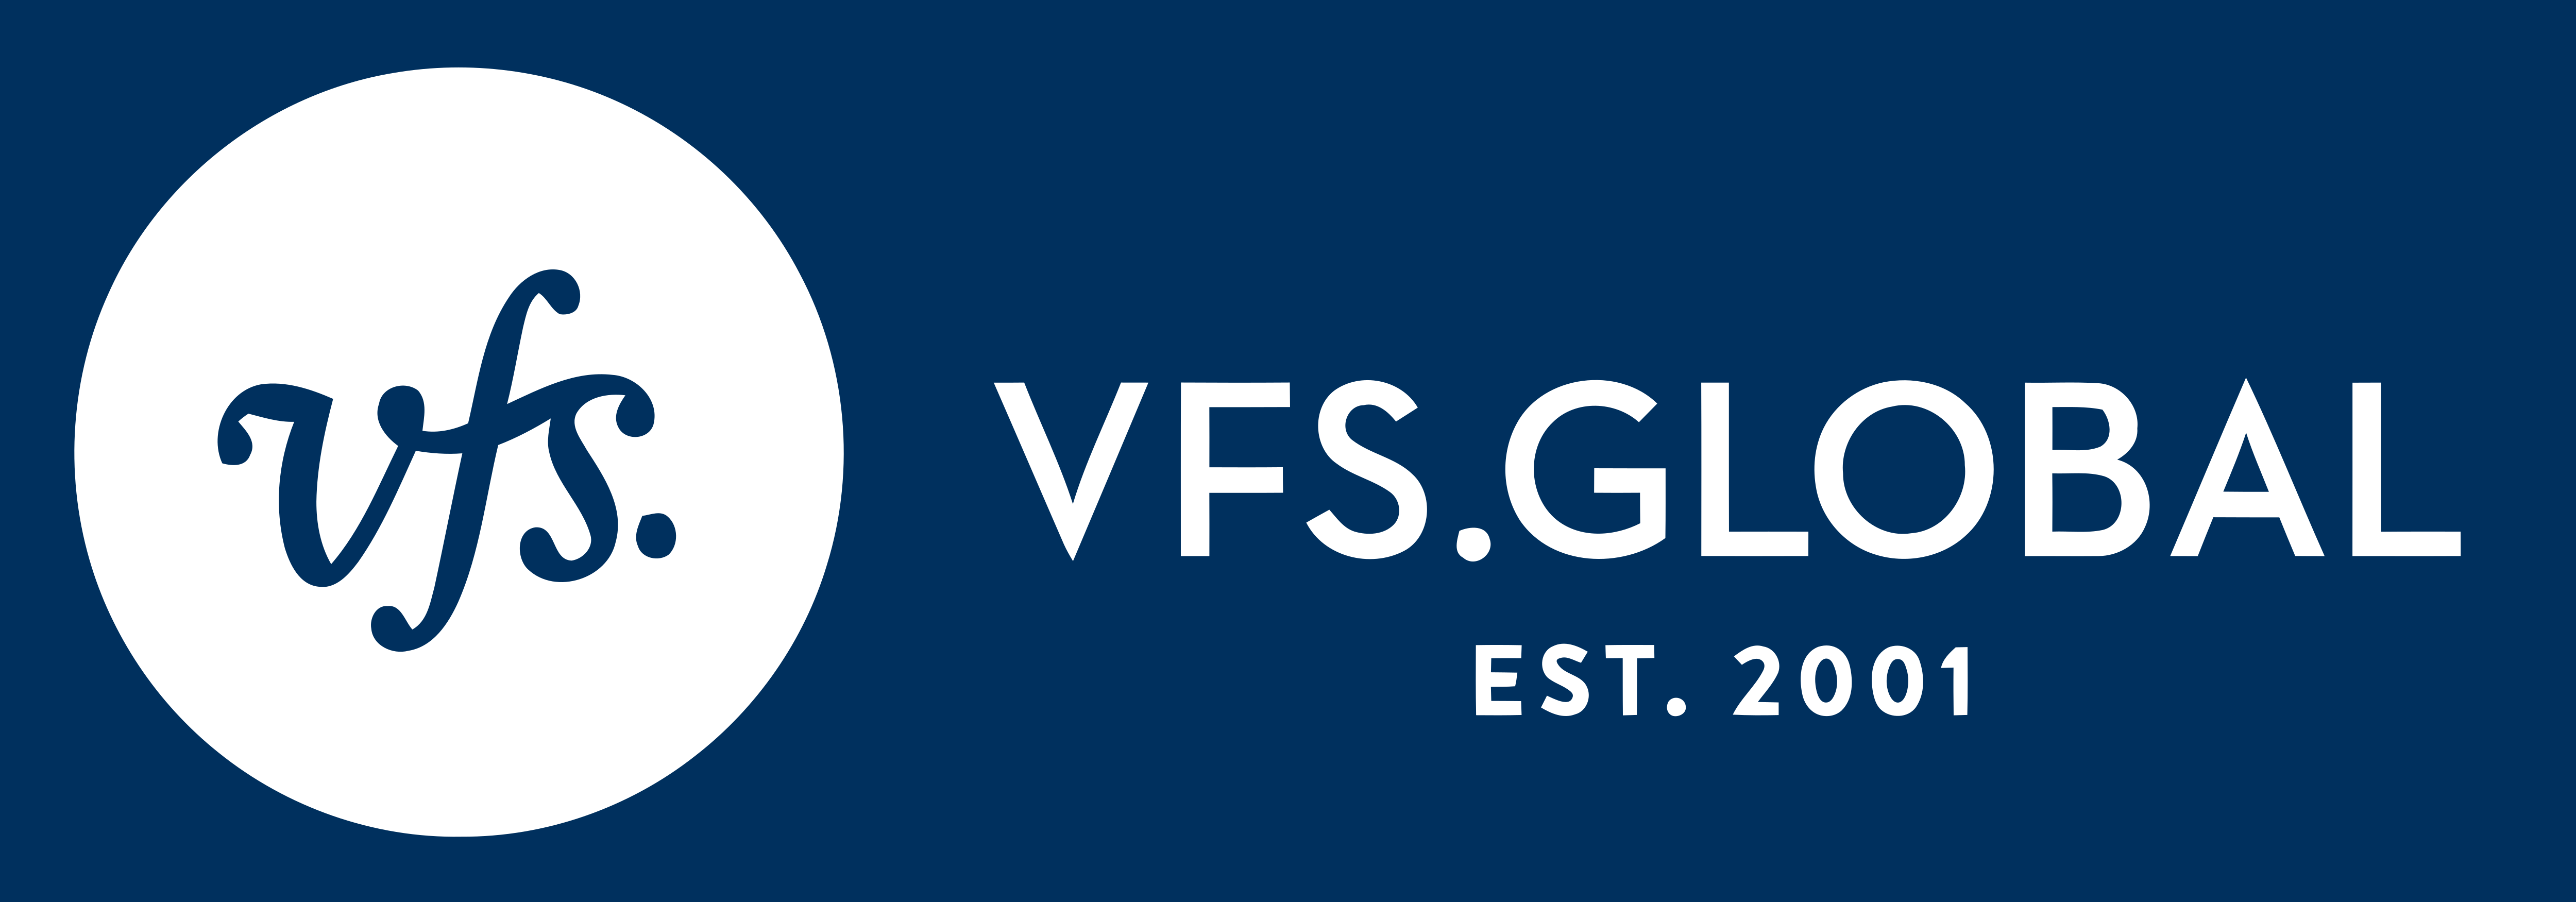 Proxy global VFS